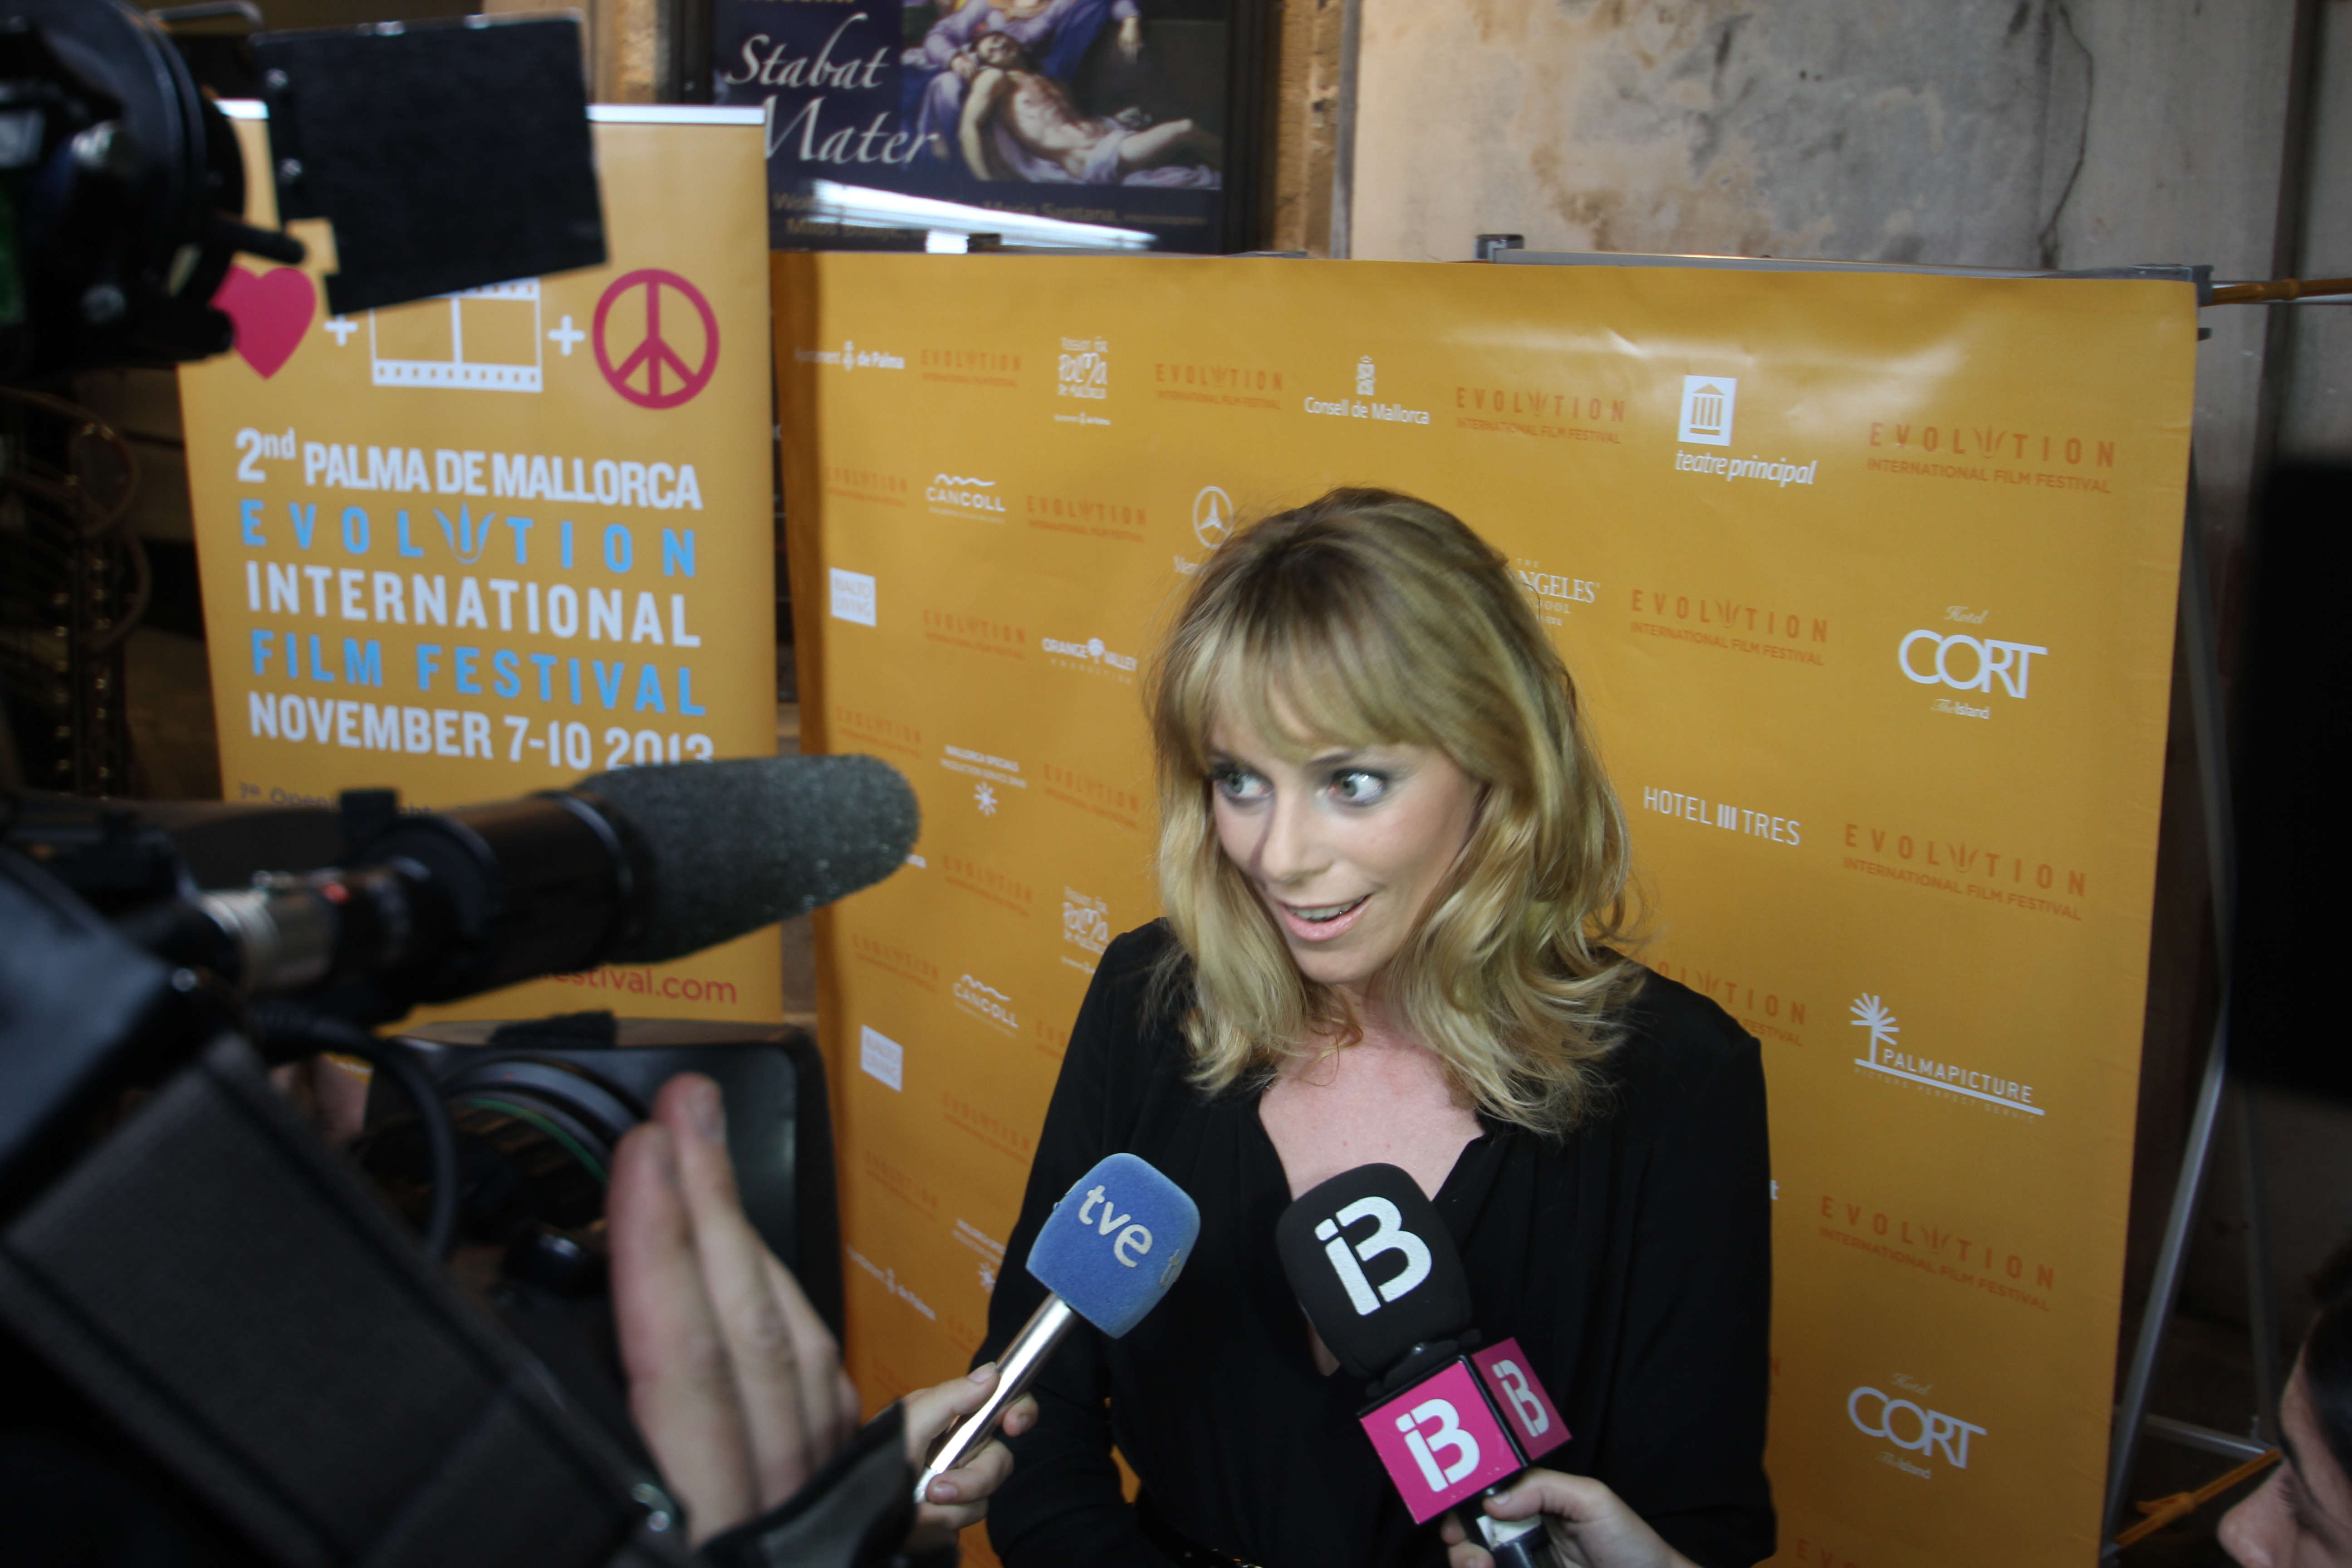 2nd Evolution Mallorca International Film Festival, 2013